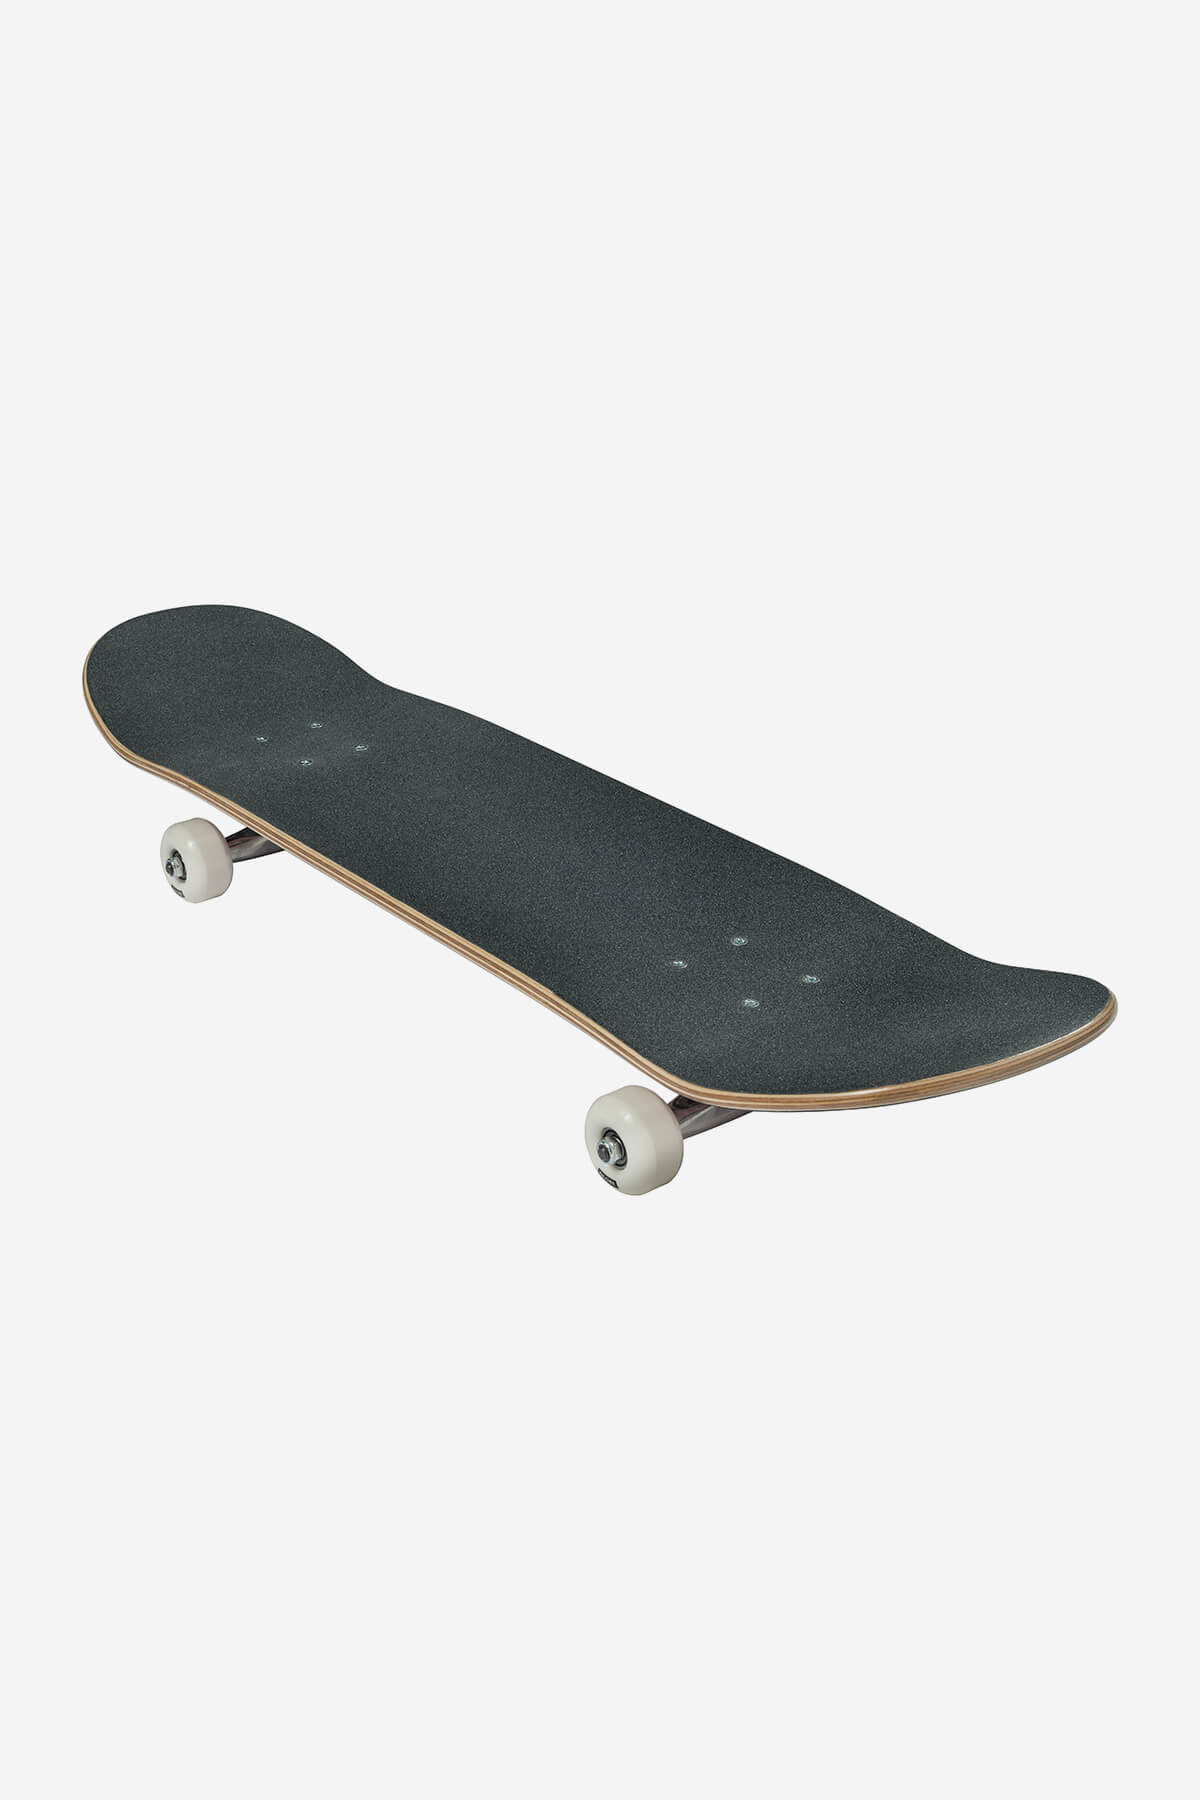 g0 fubar nero rosa 8.0" completo skateboard